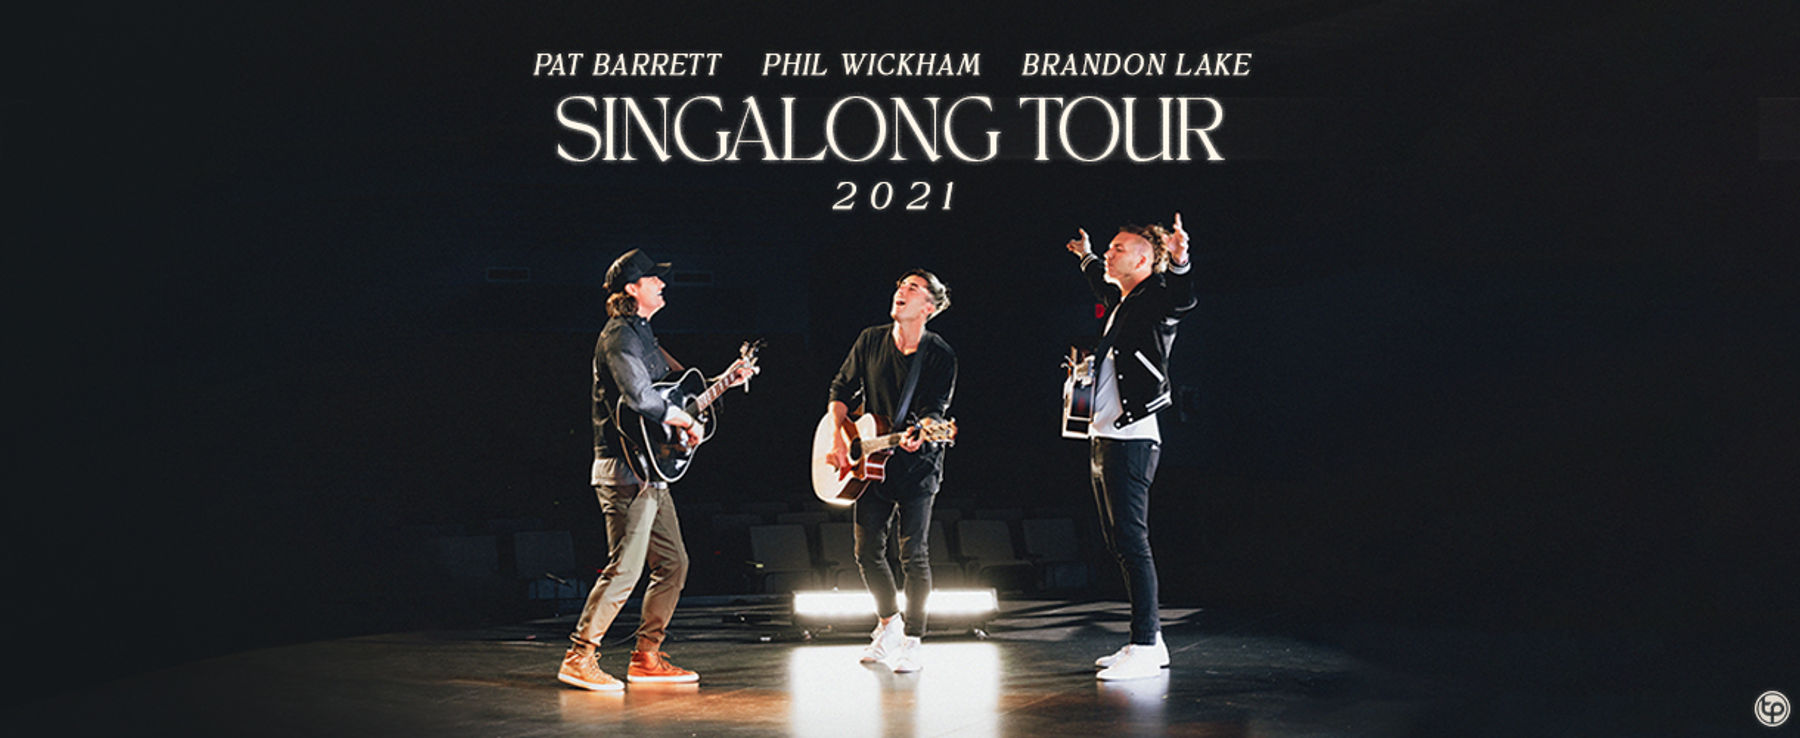 Phil Wickham Singalong Tour feat. Pat Barrett and Brandon Lake